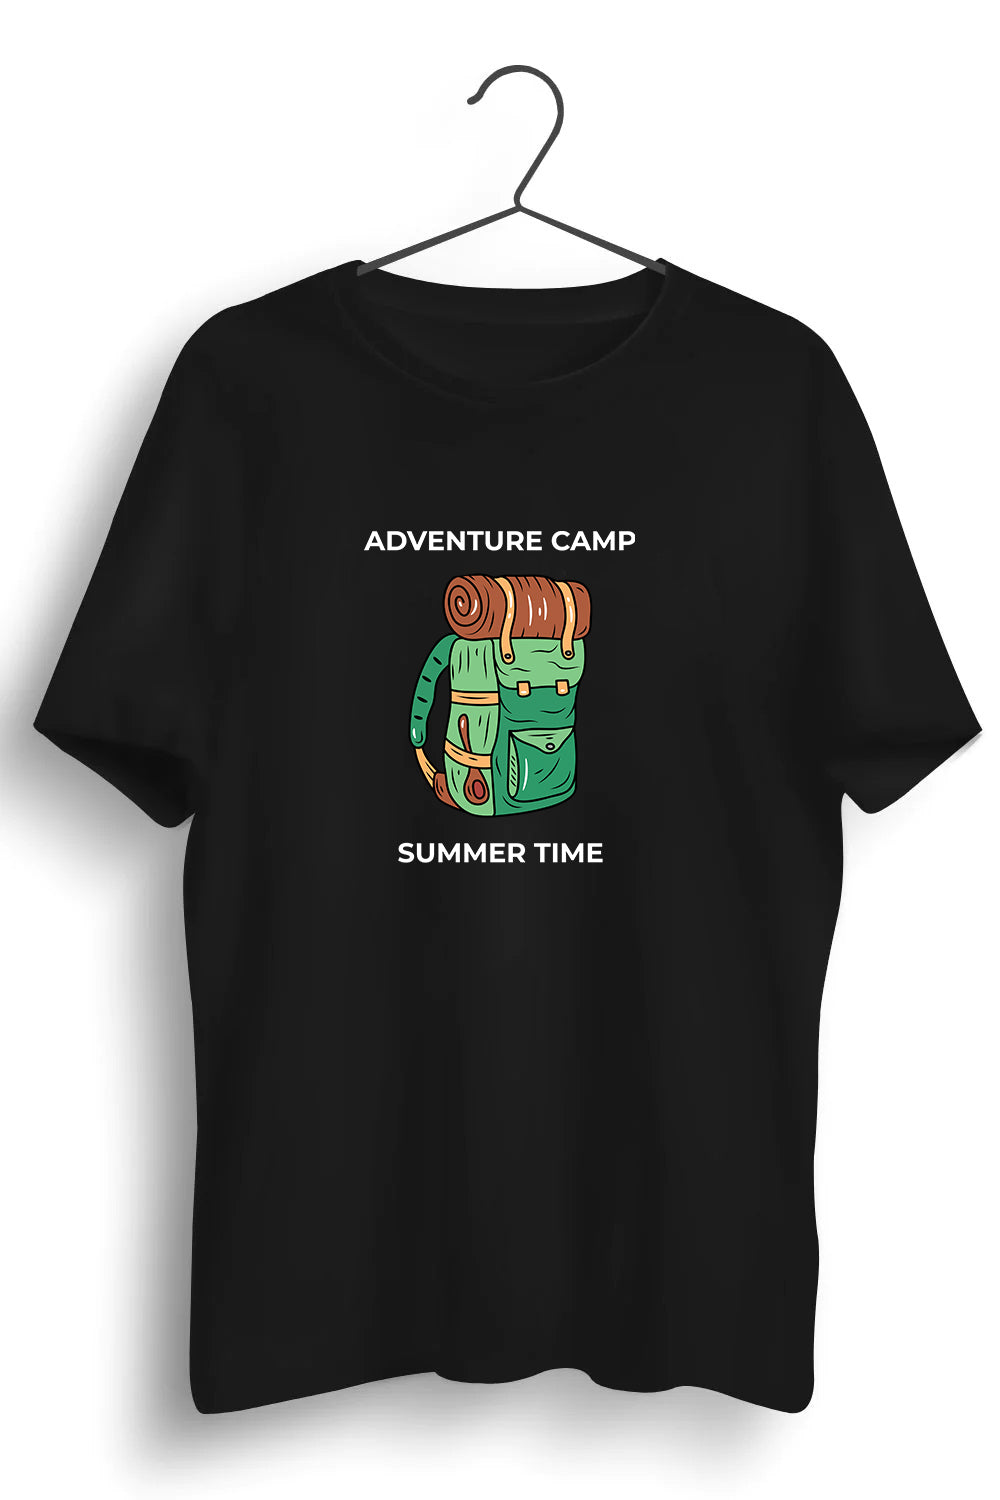 Adventure Camp Summer Time Graphic Printed Black Tshirt